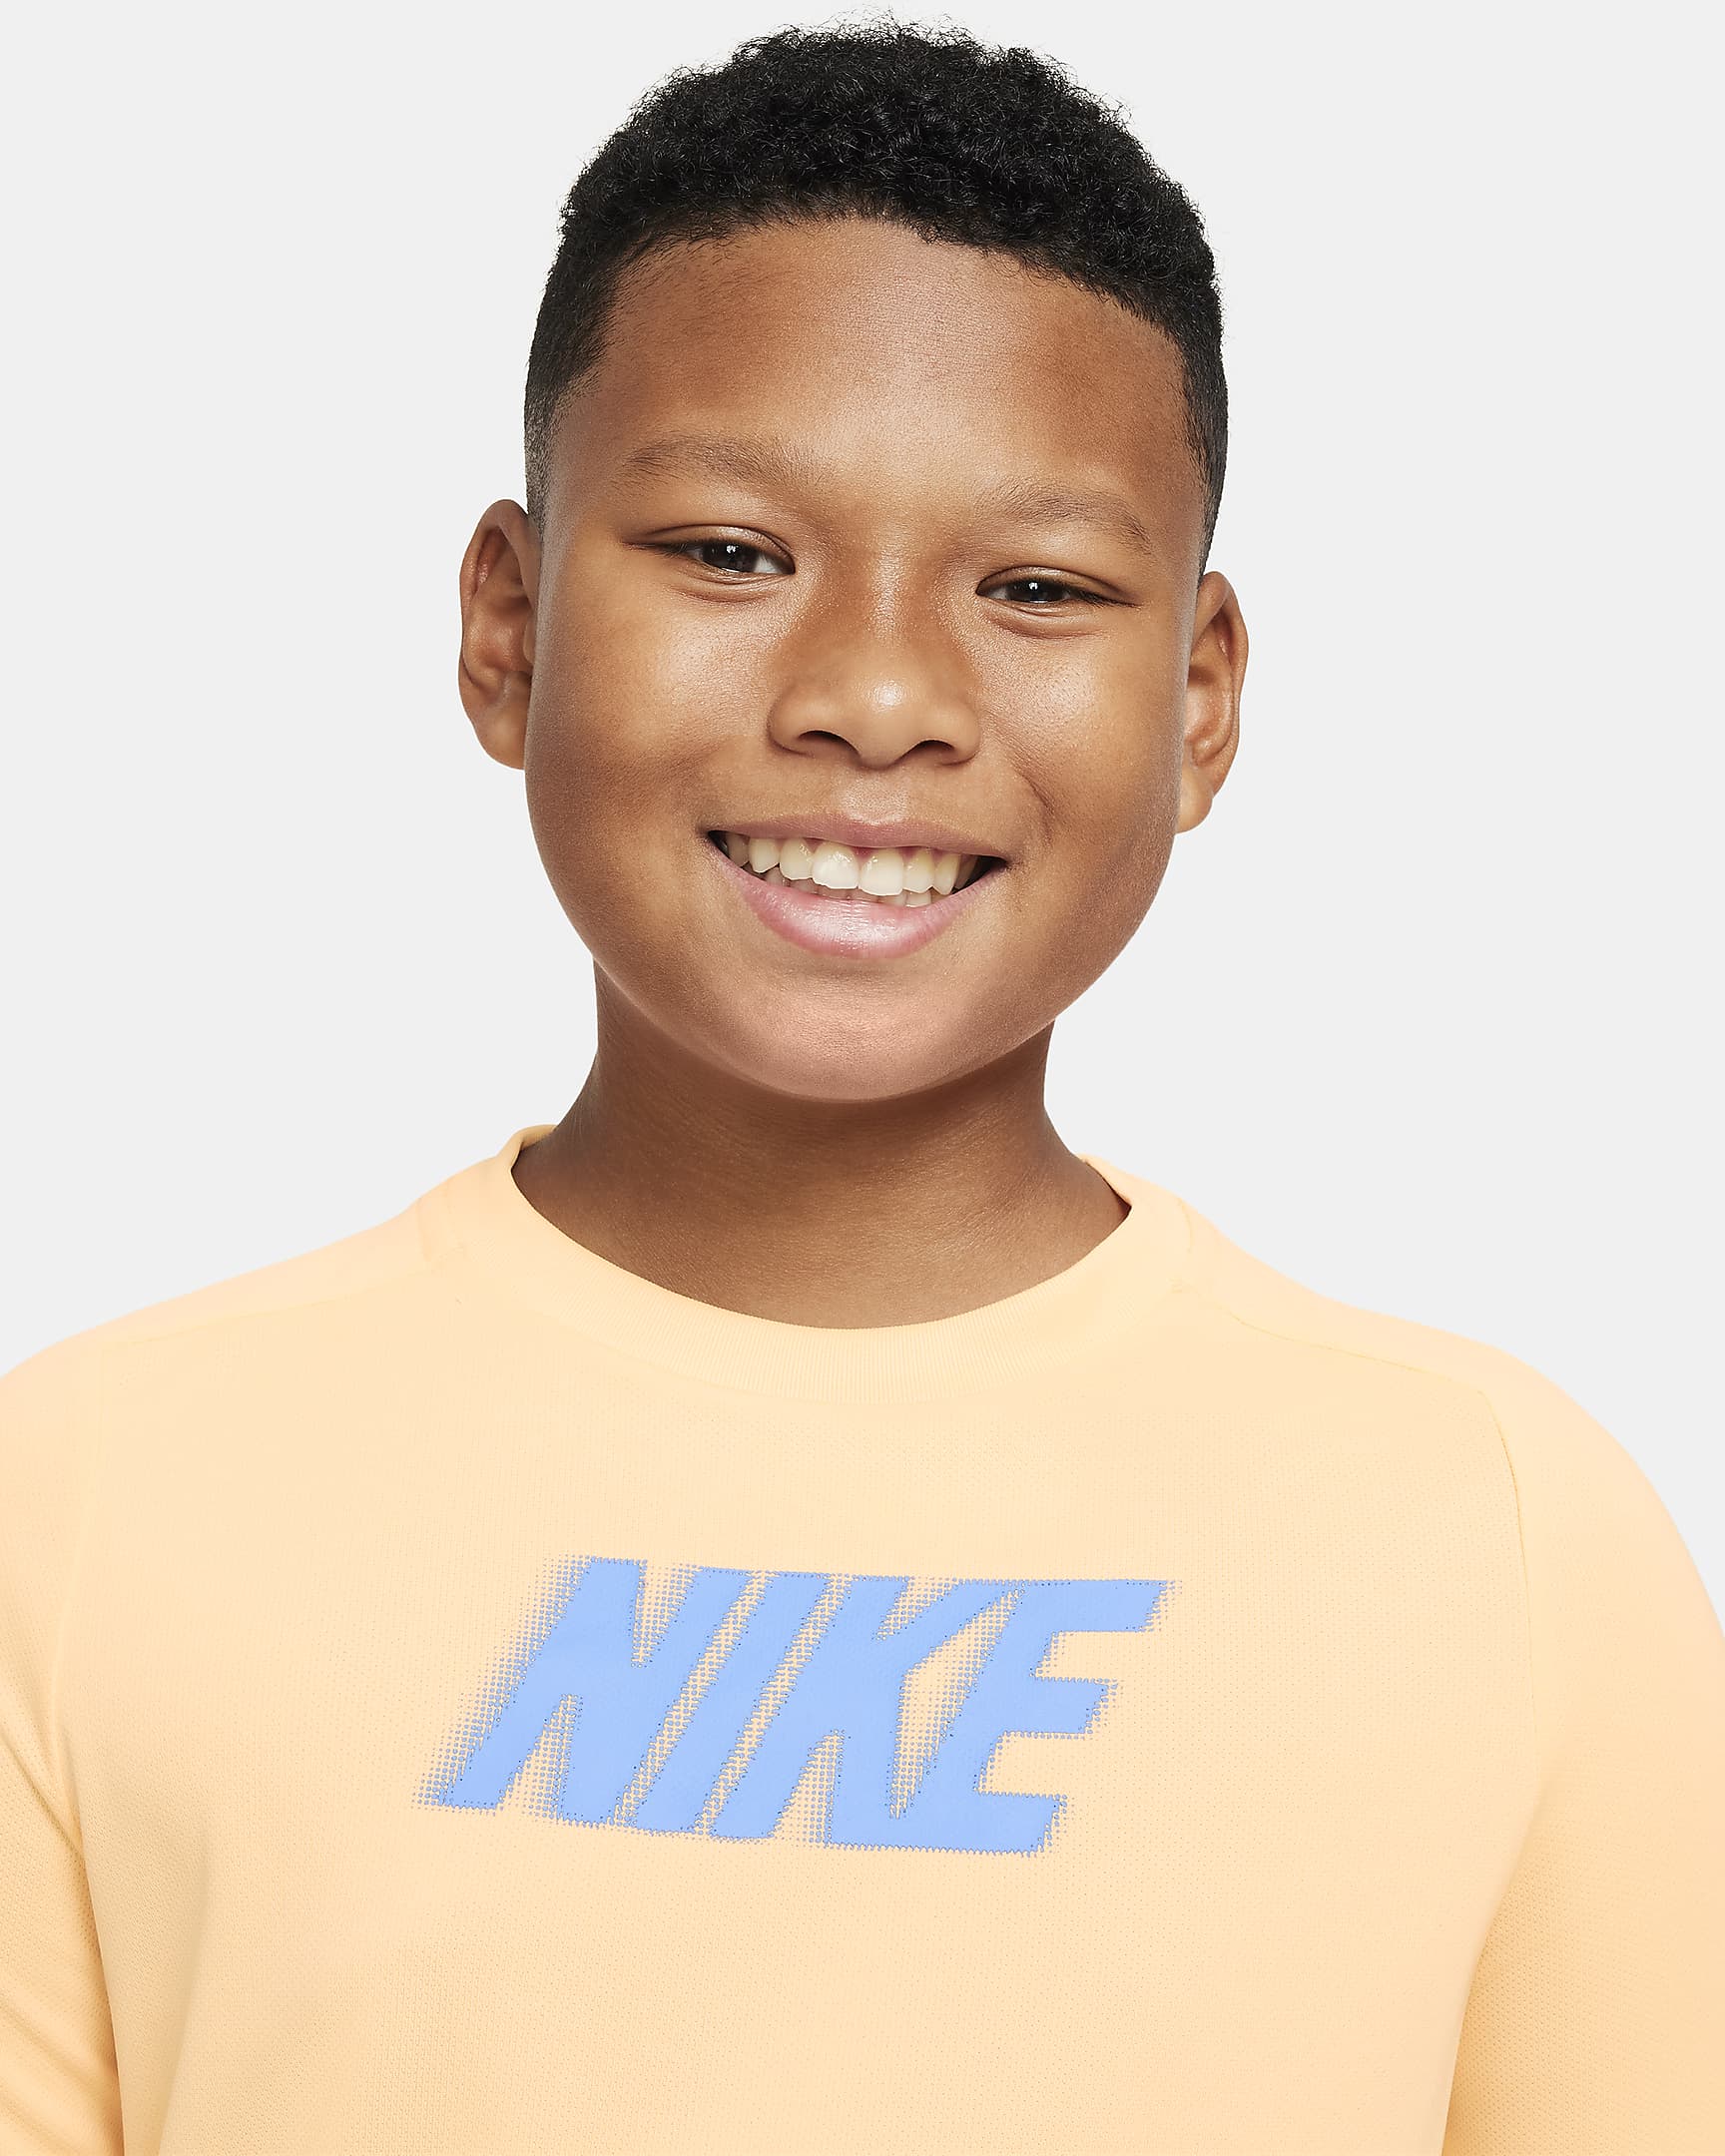 Nike Dri-FIT Multi+ Big Kids' (Boys') Long-Sleeve Top. Nike.com